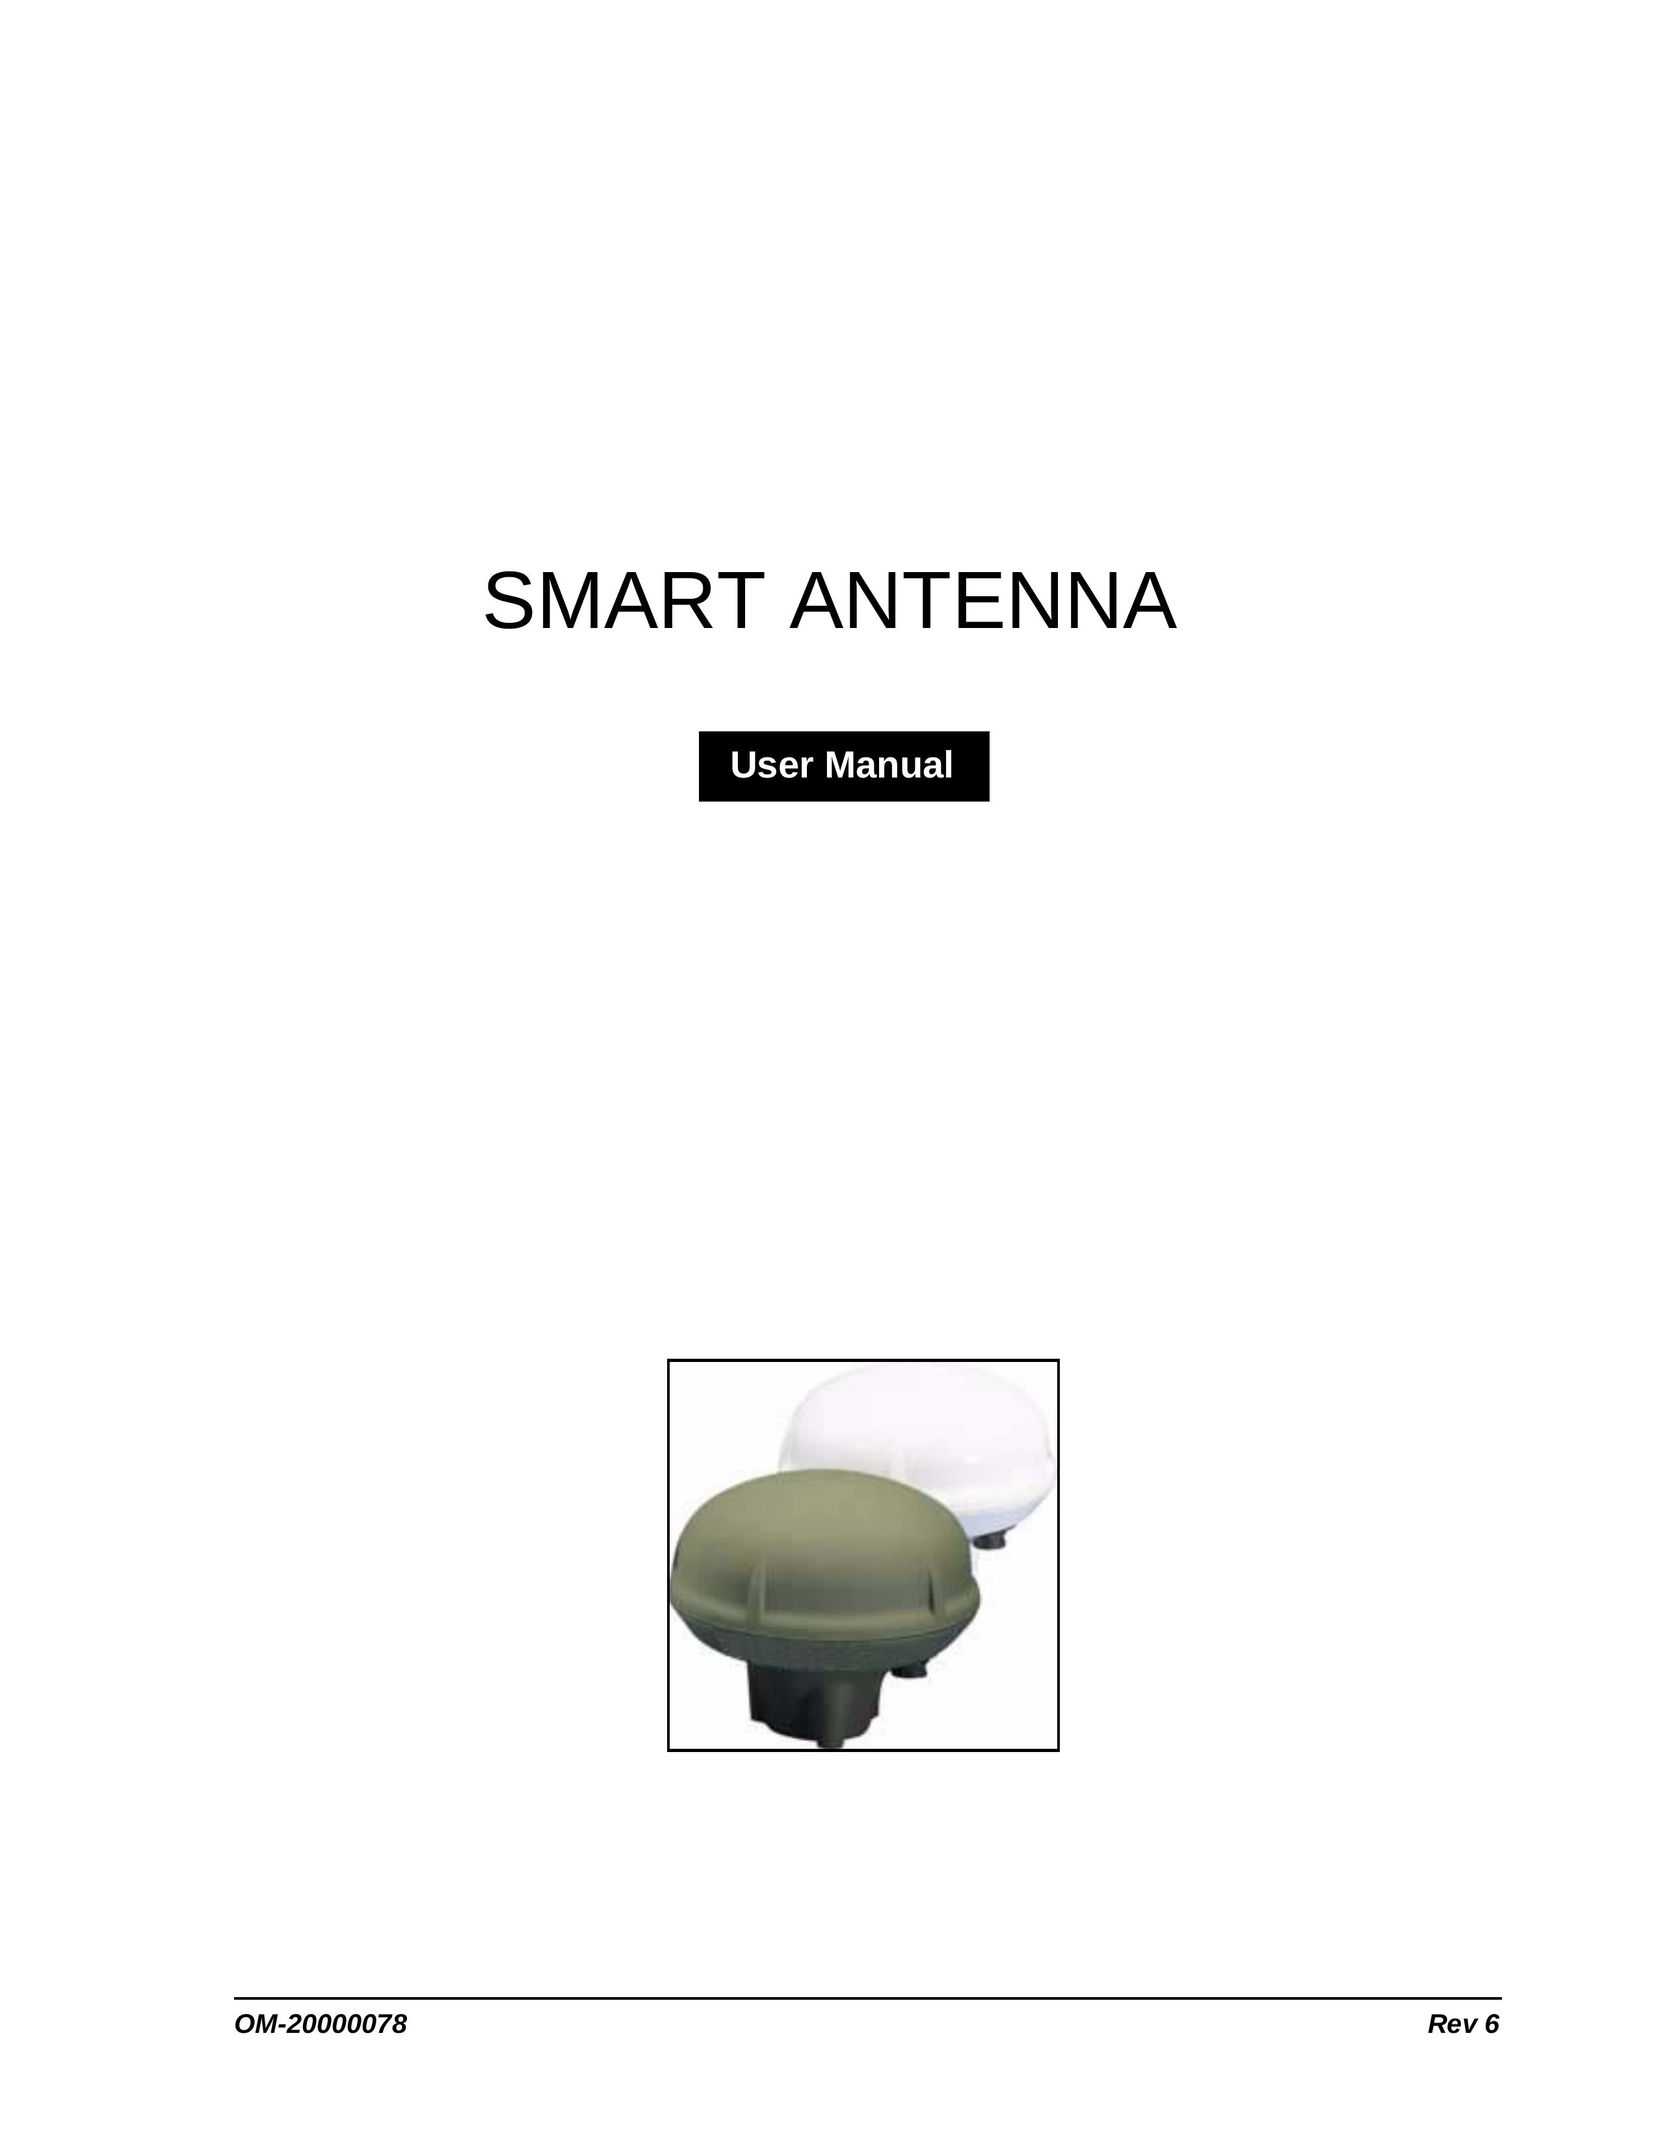 Novatel SMART ANTENNA Stereo System User Manual